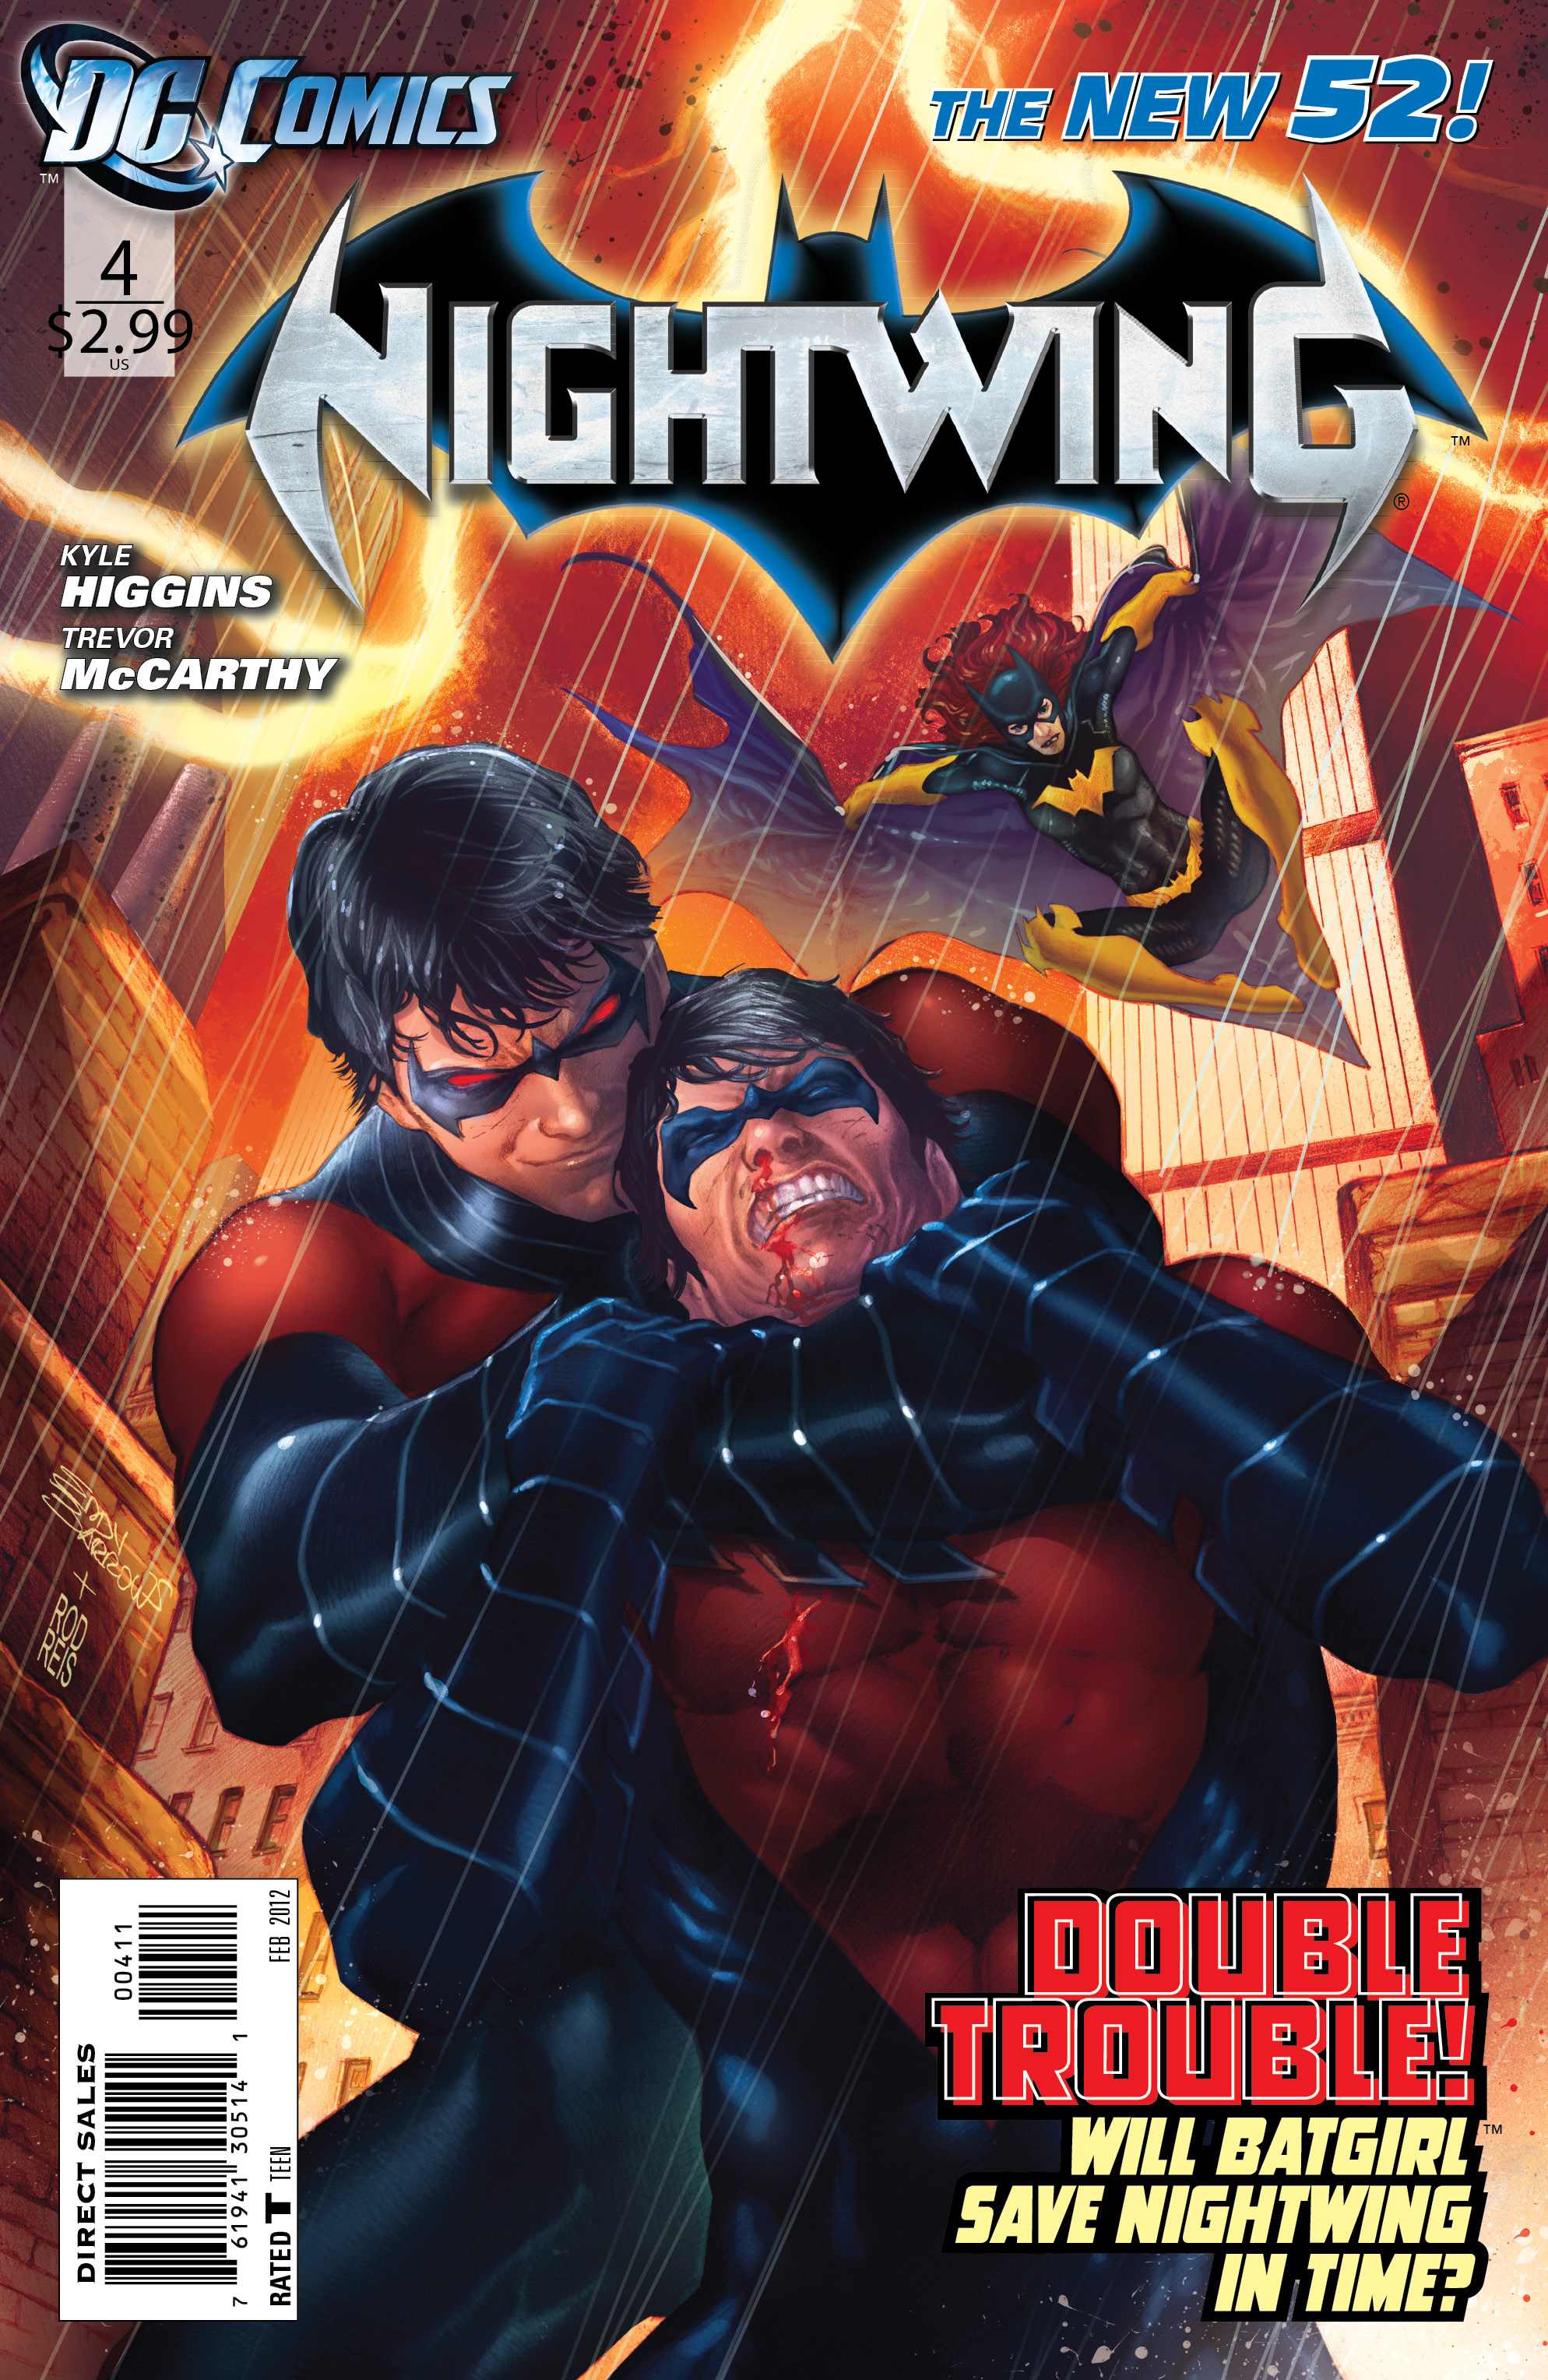 Nightwing Vol. 3 #4